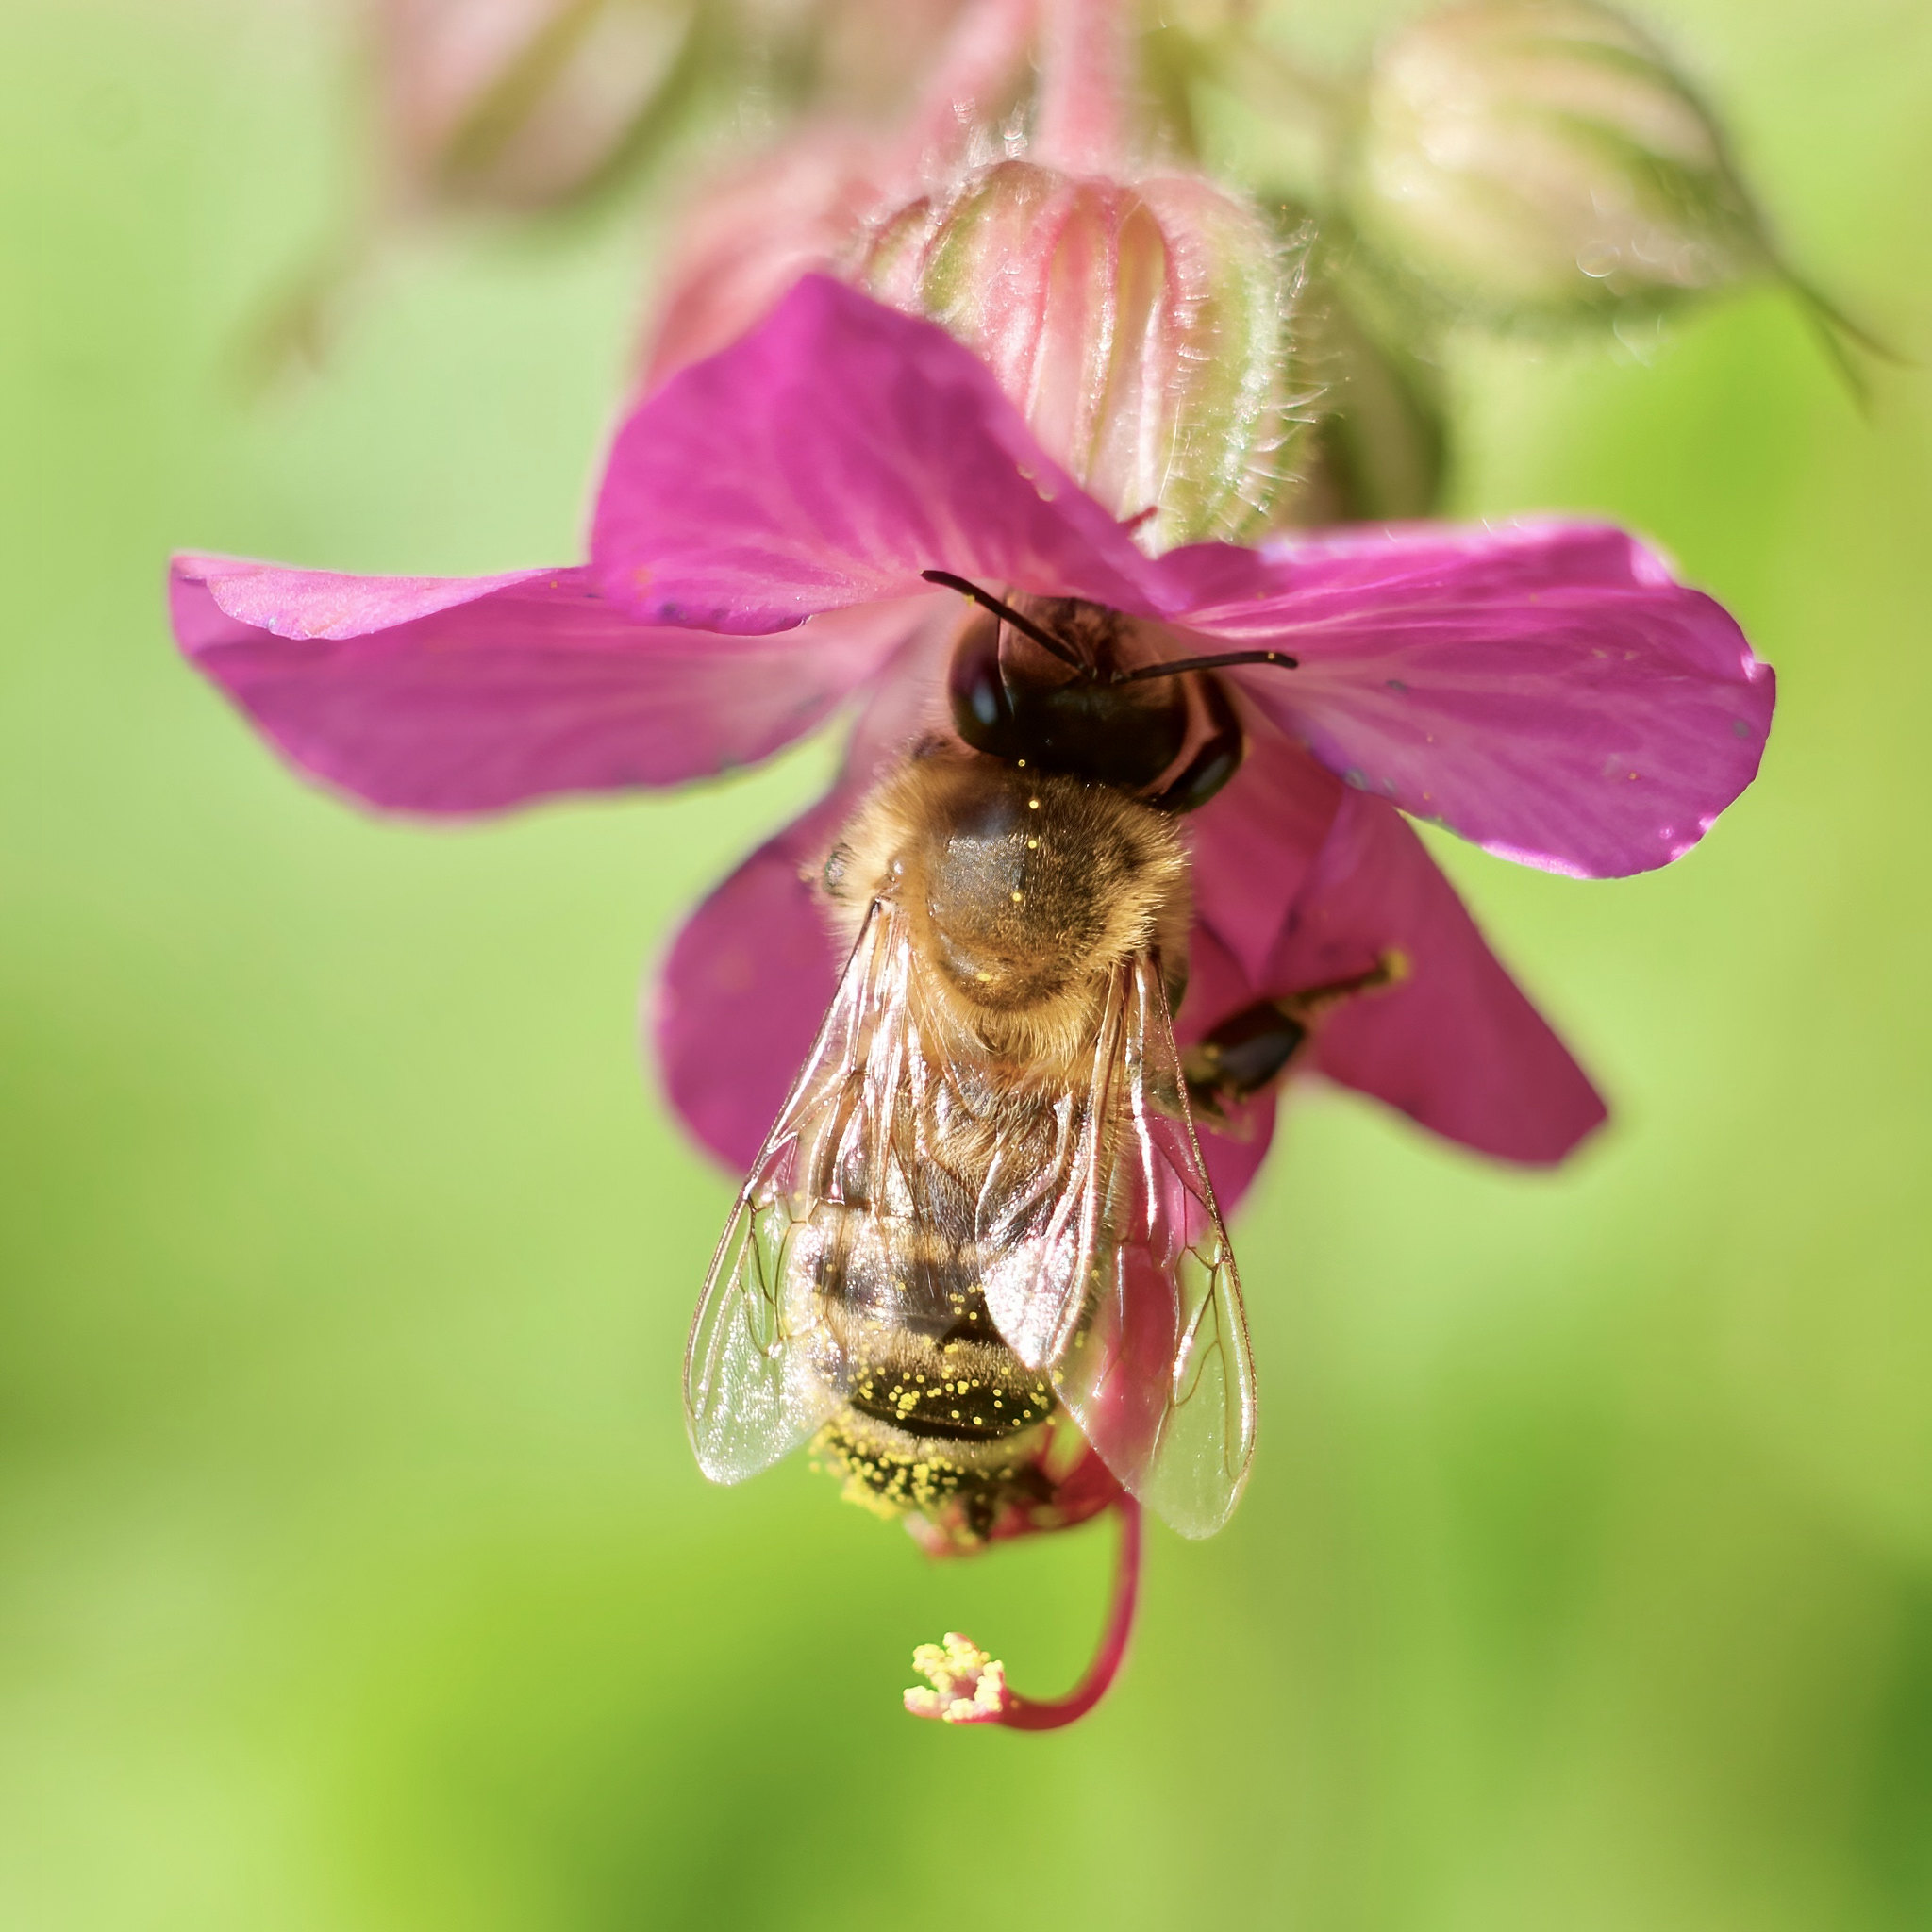 Bee and Geranium – Rechtmehring, Upper Bavaria, Germany